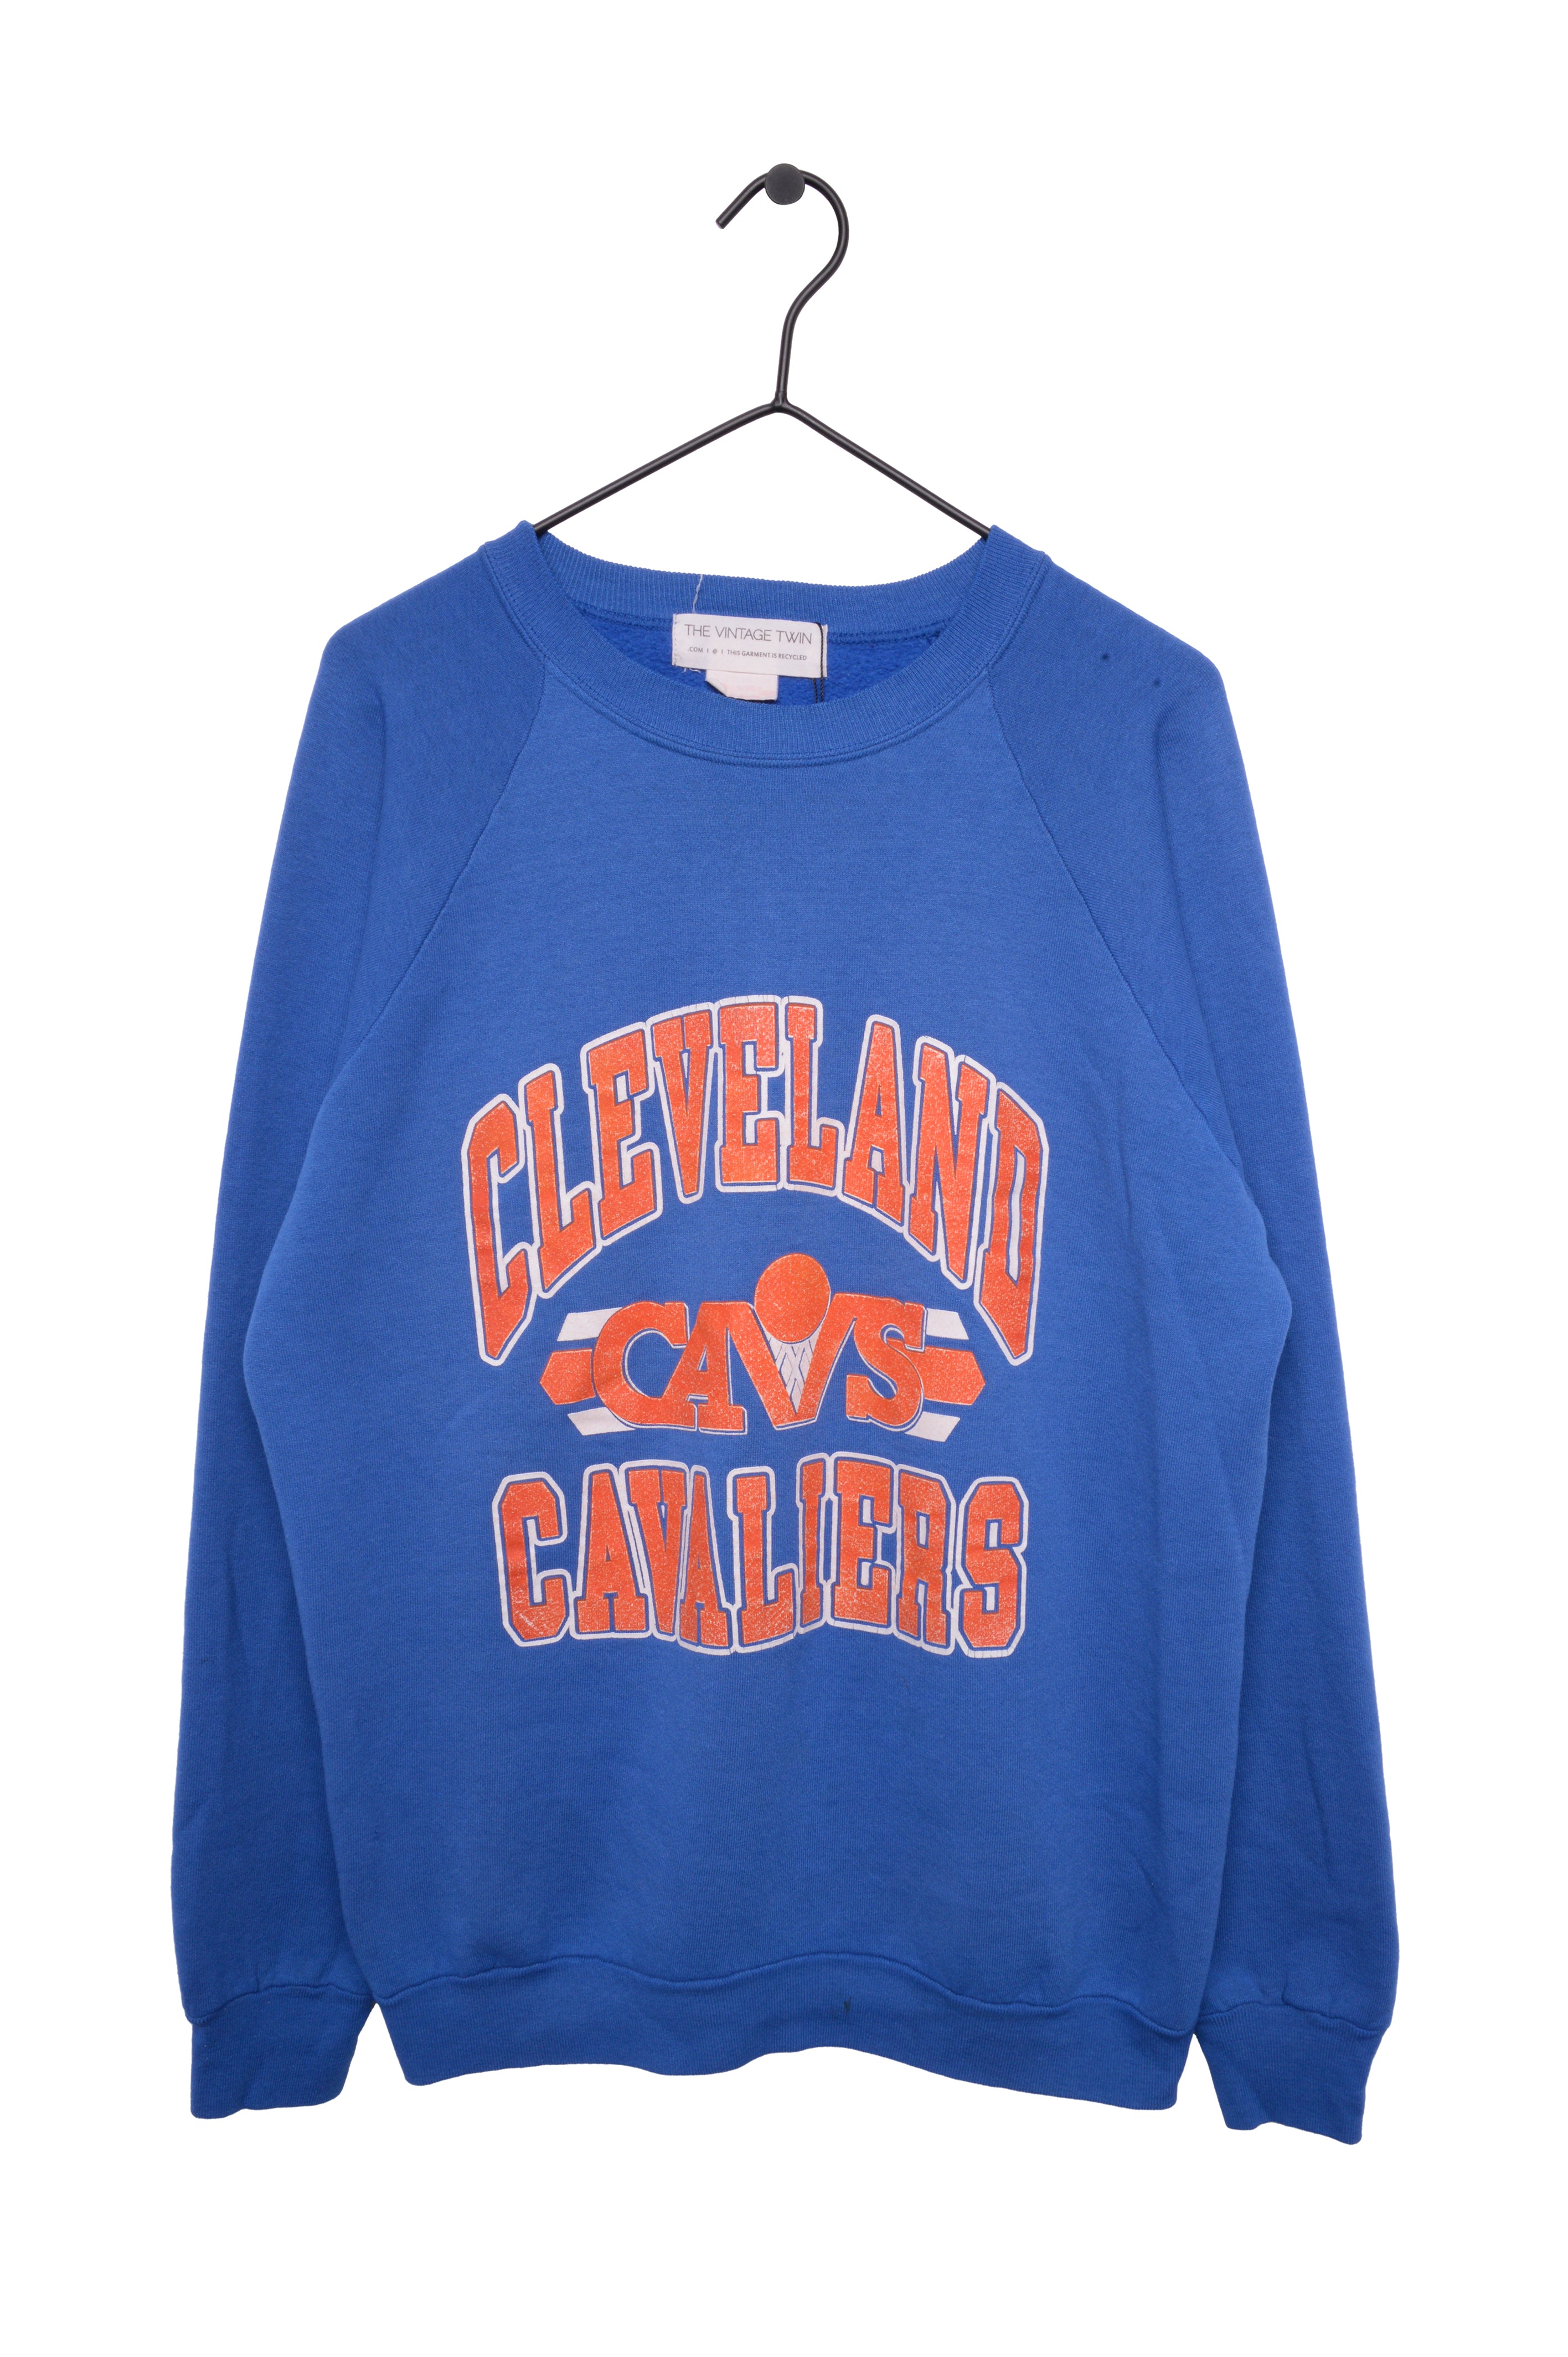 Cleveland Cavaliers Sweatshirt. Vintage 80s Cavs Sweater Blue